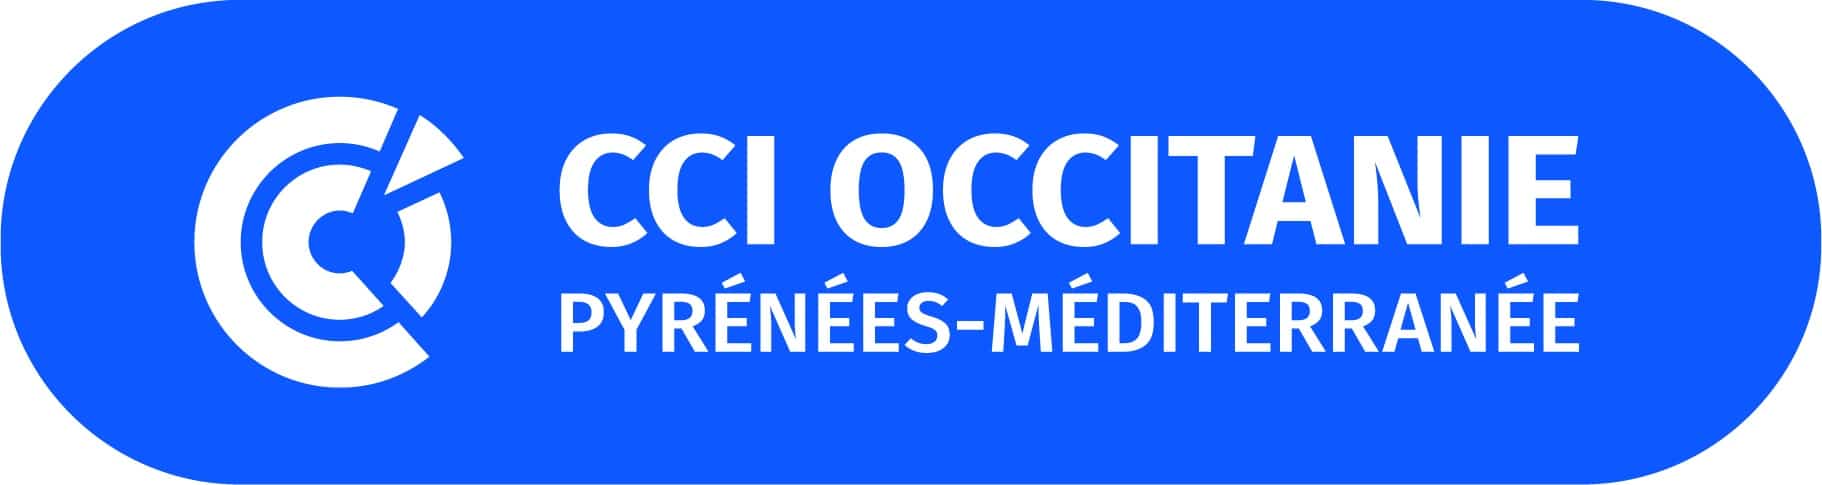 logo_cci-occitanie